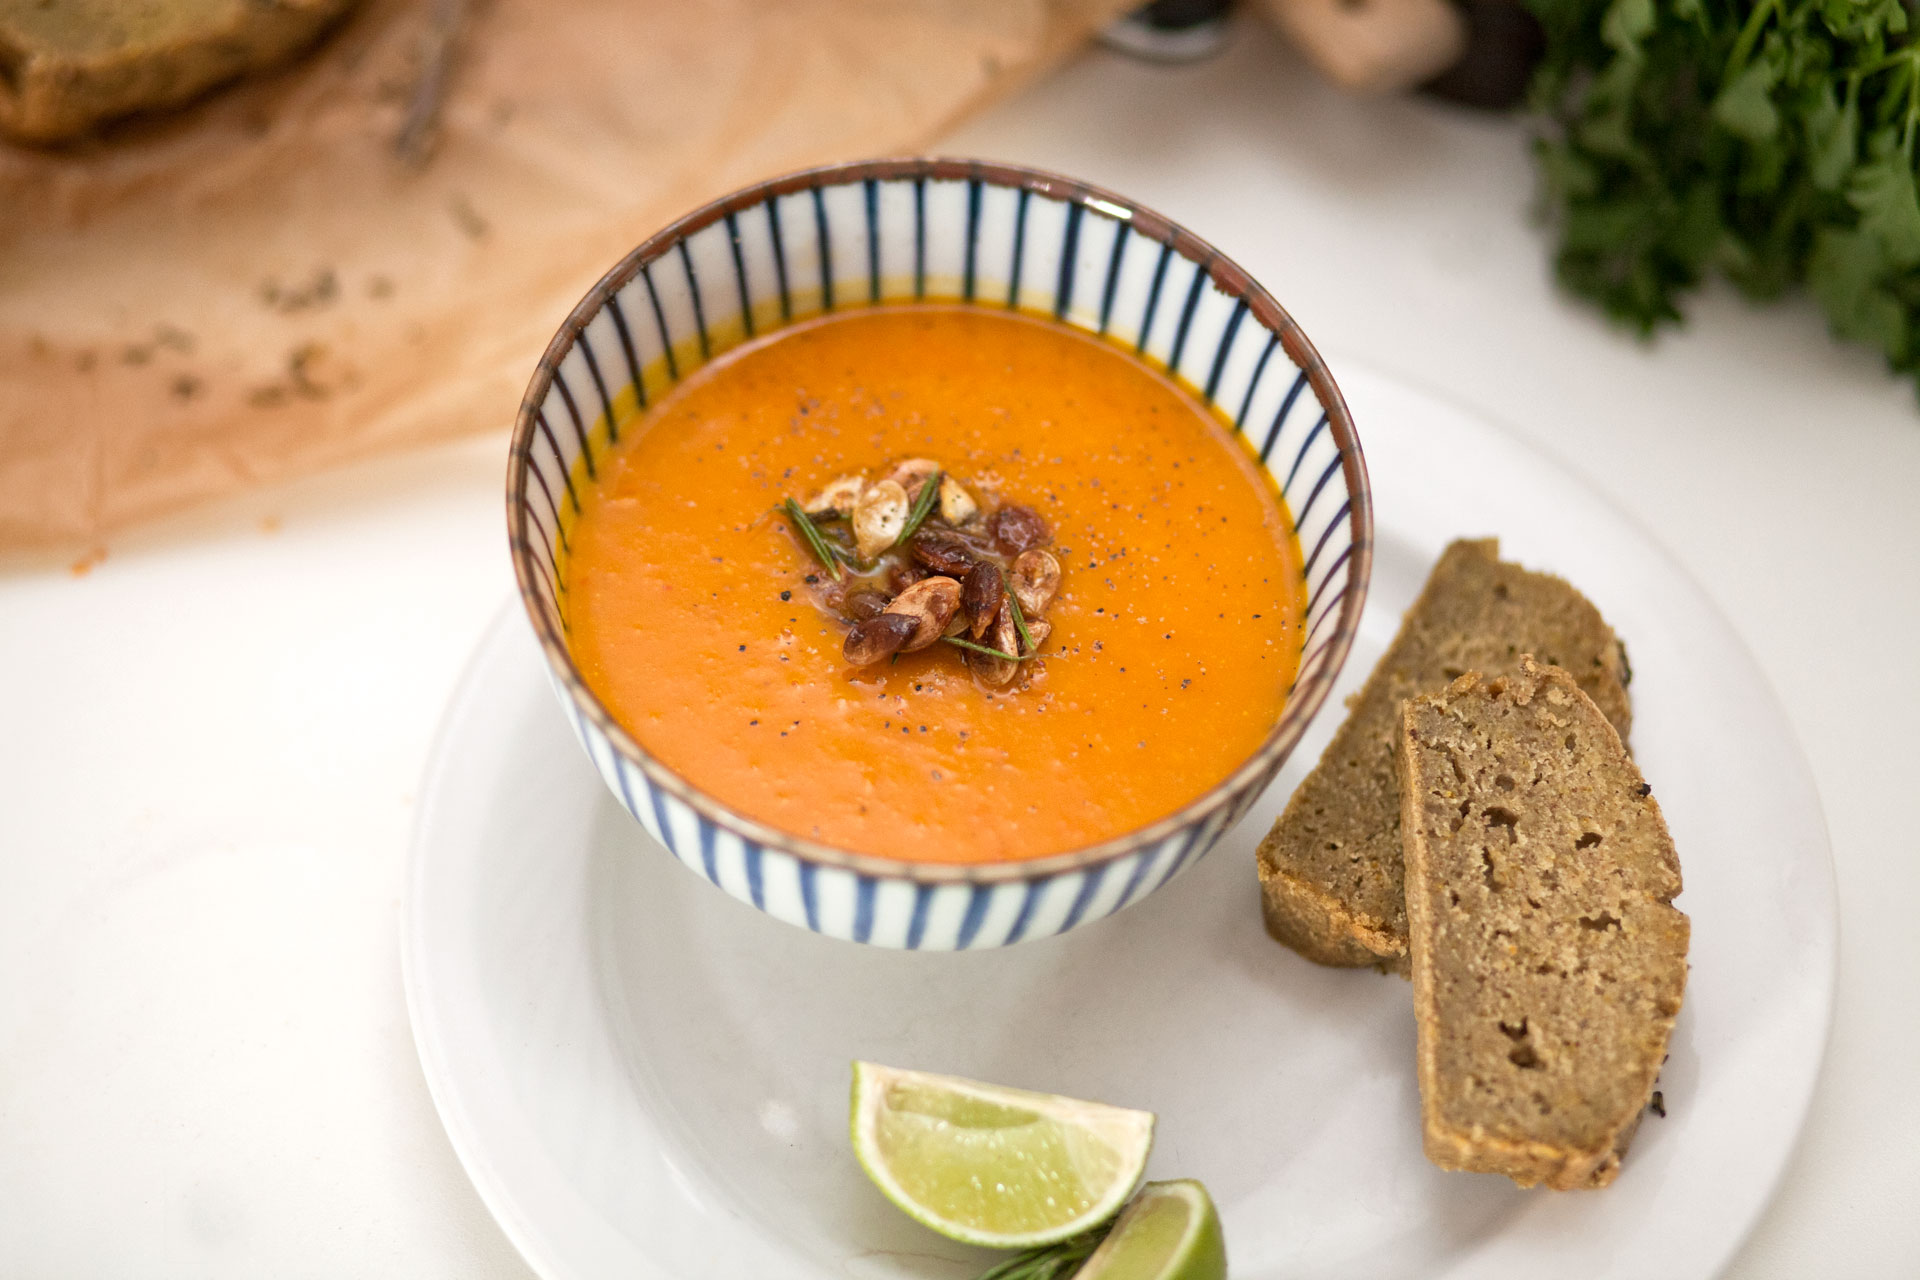 Nina Wagner's Vegan Recipe for Pumpkin, Chili, Ginger Soup